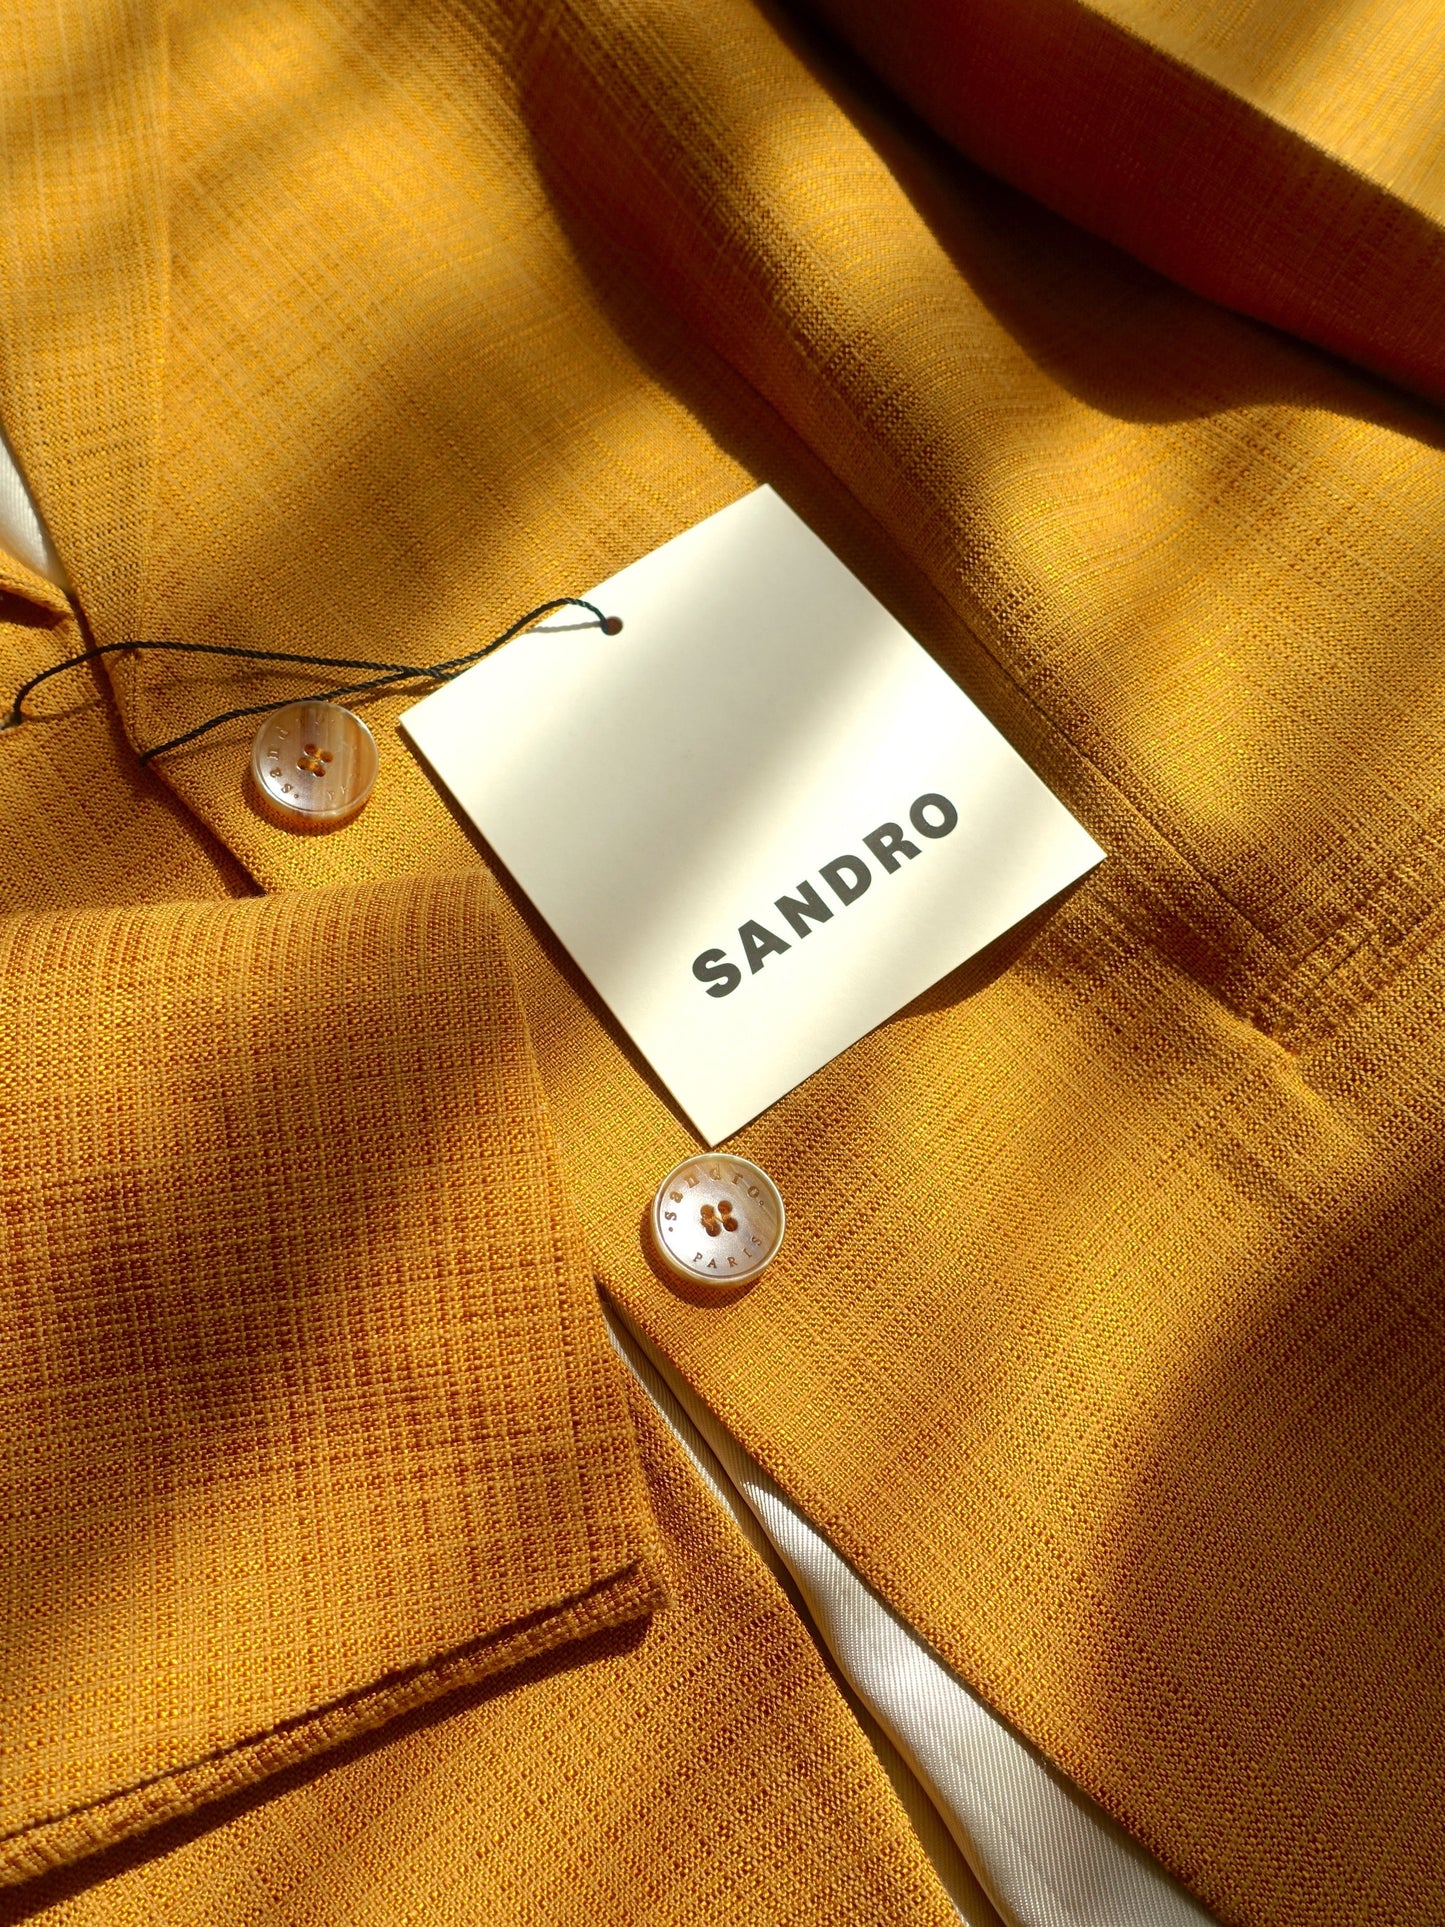 Sandro Paris classic blazer golden yellow